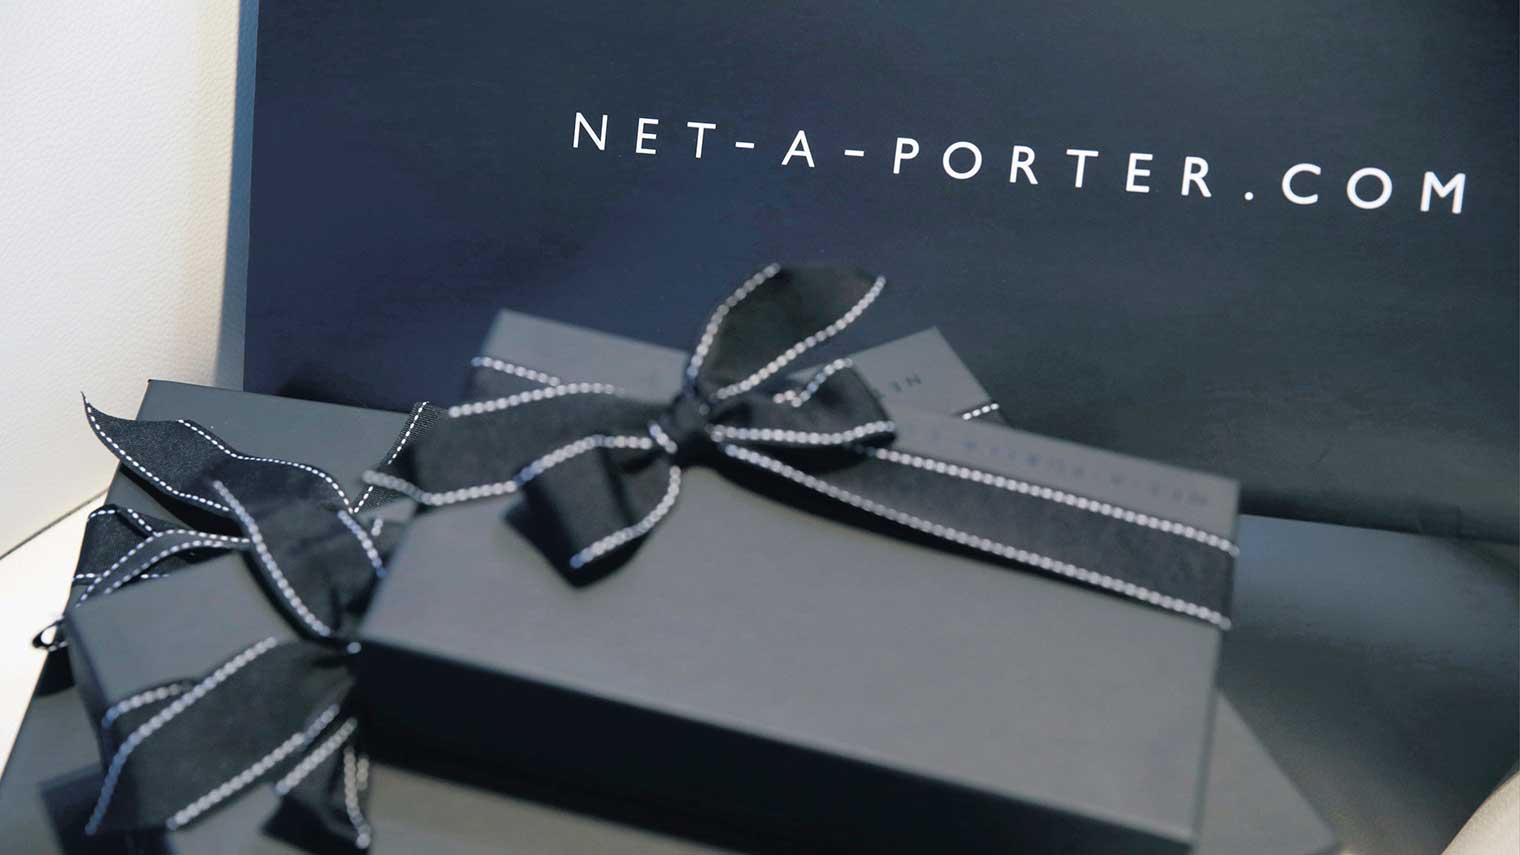 NET-A-PORTER appoints MD